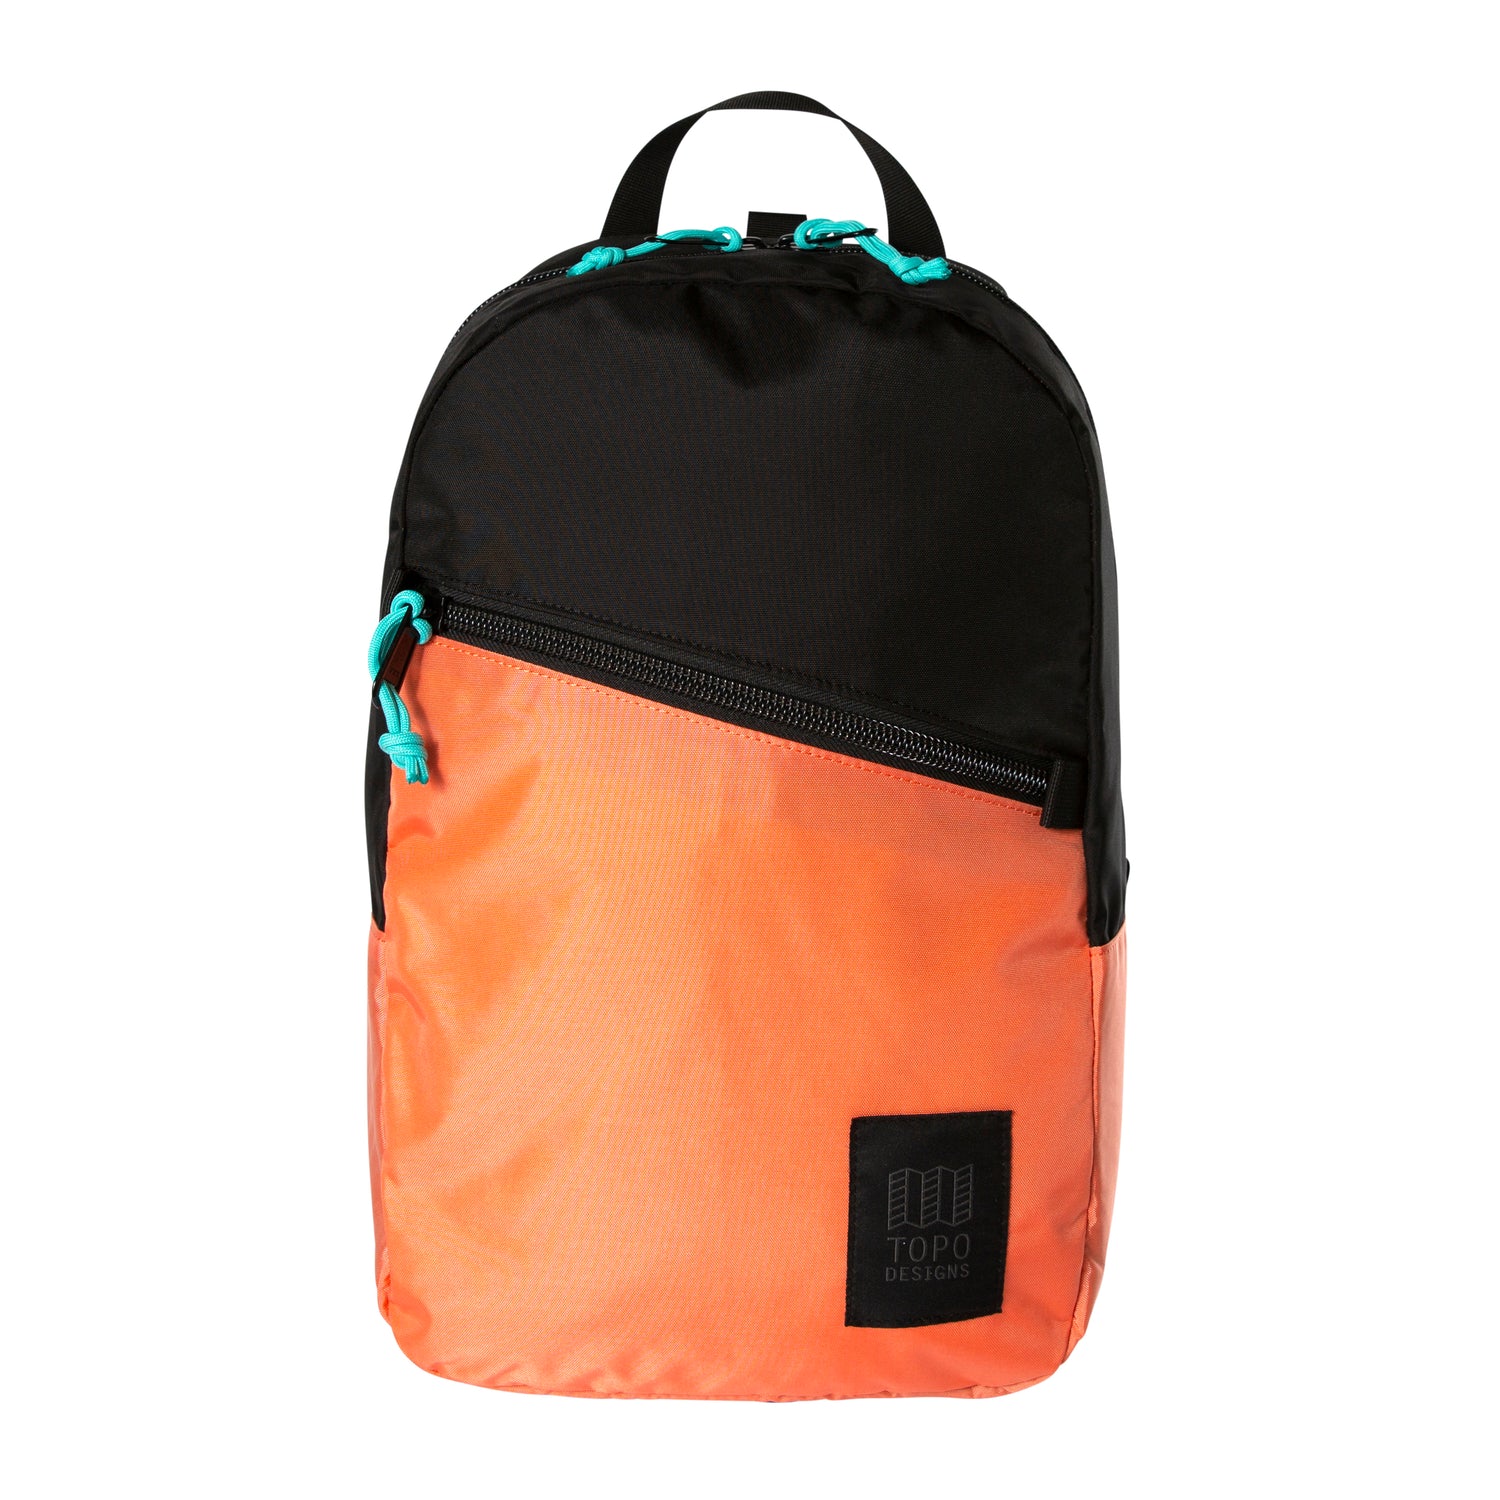 Topo Designs Light Pack - Black/Coral